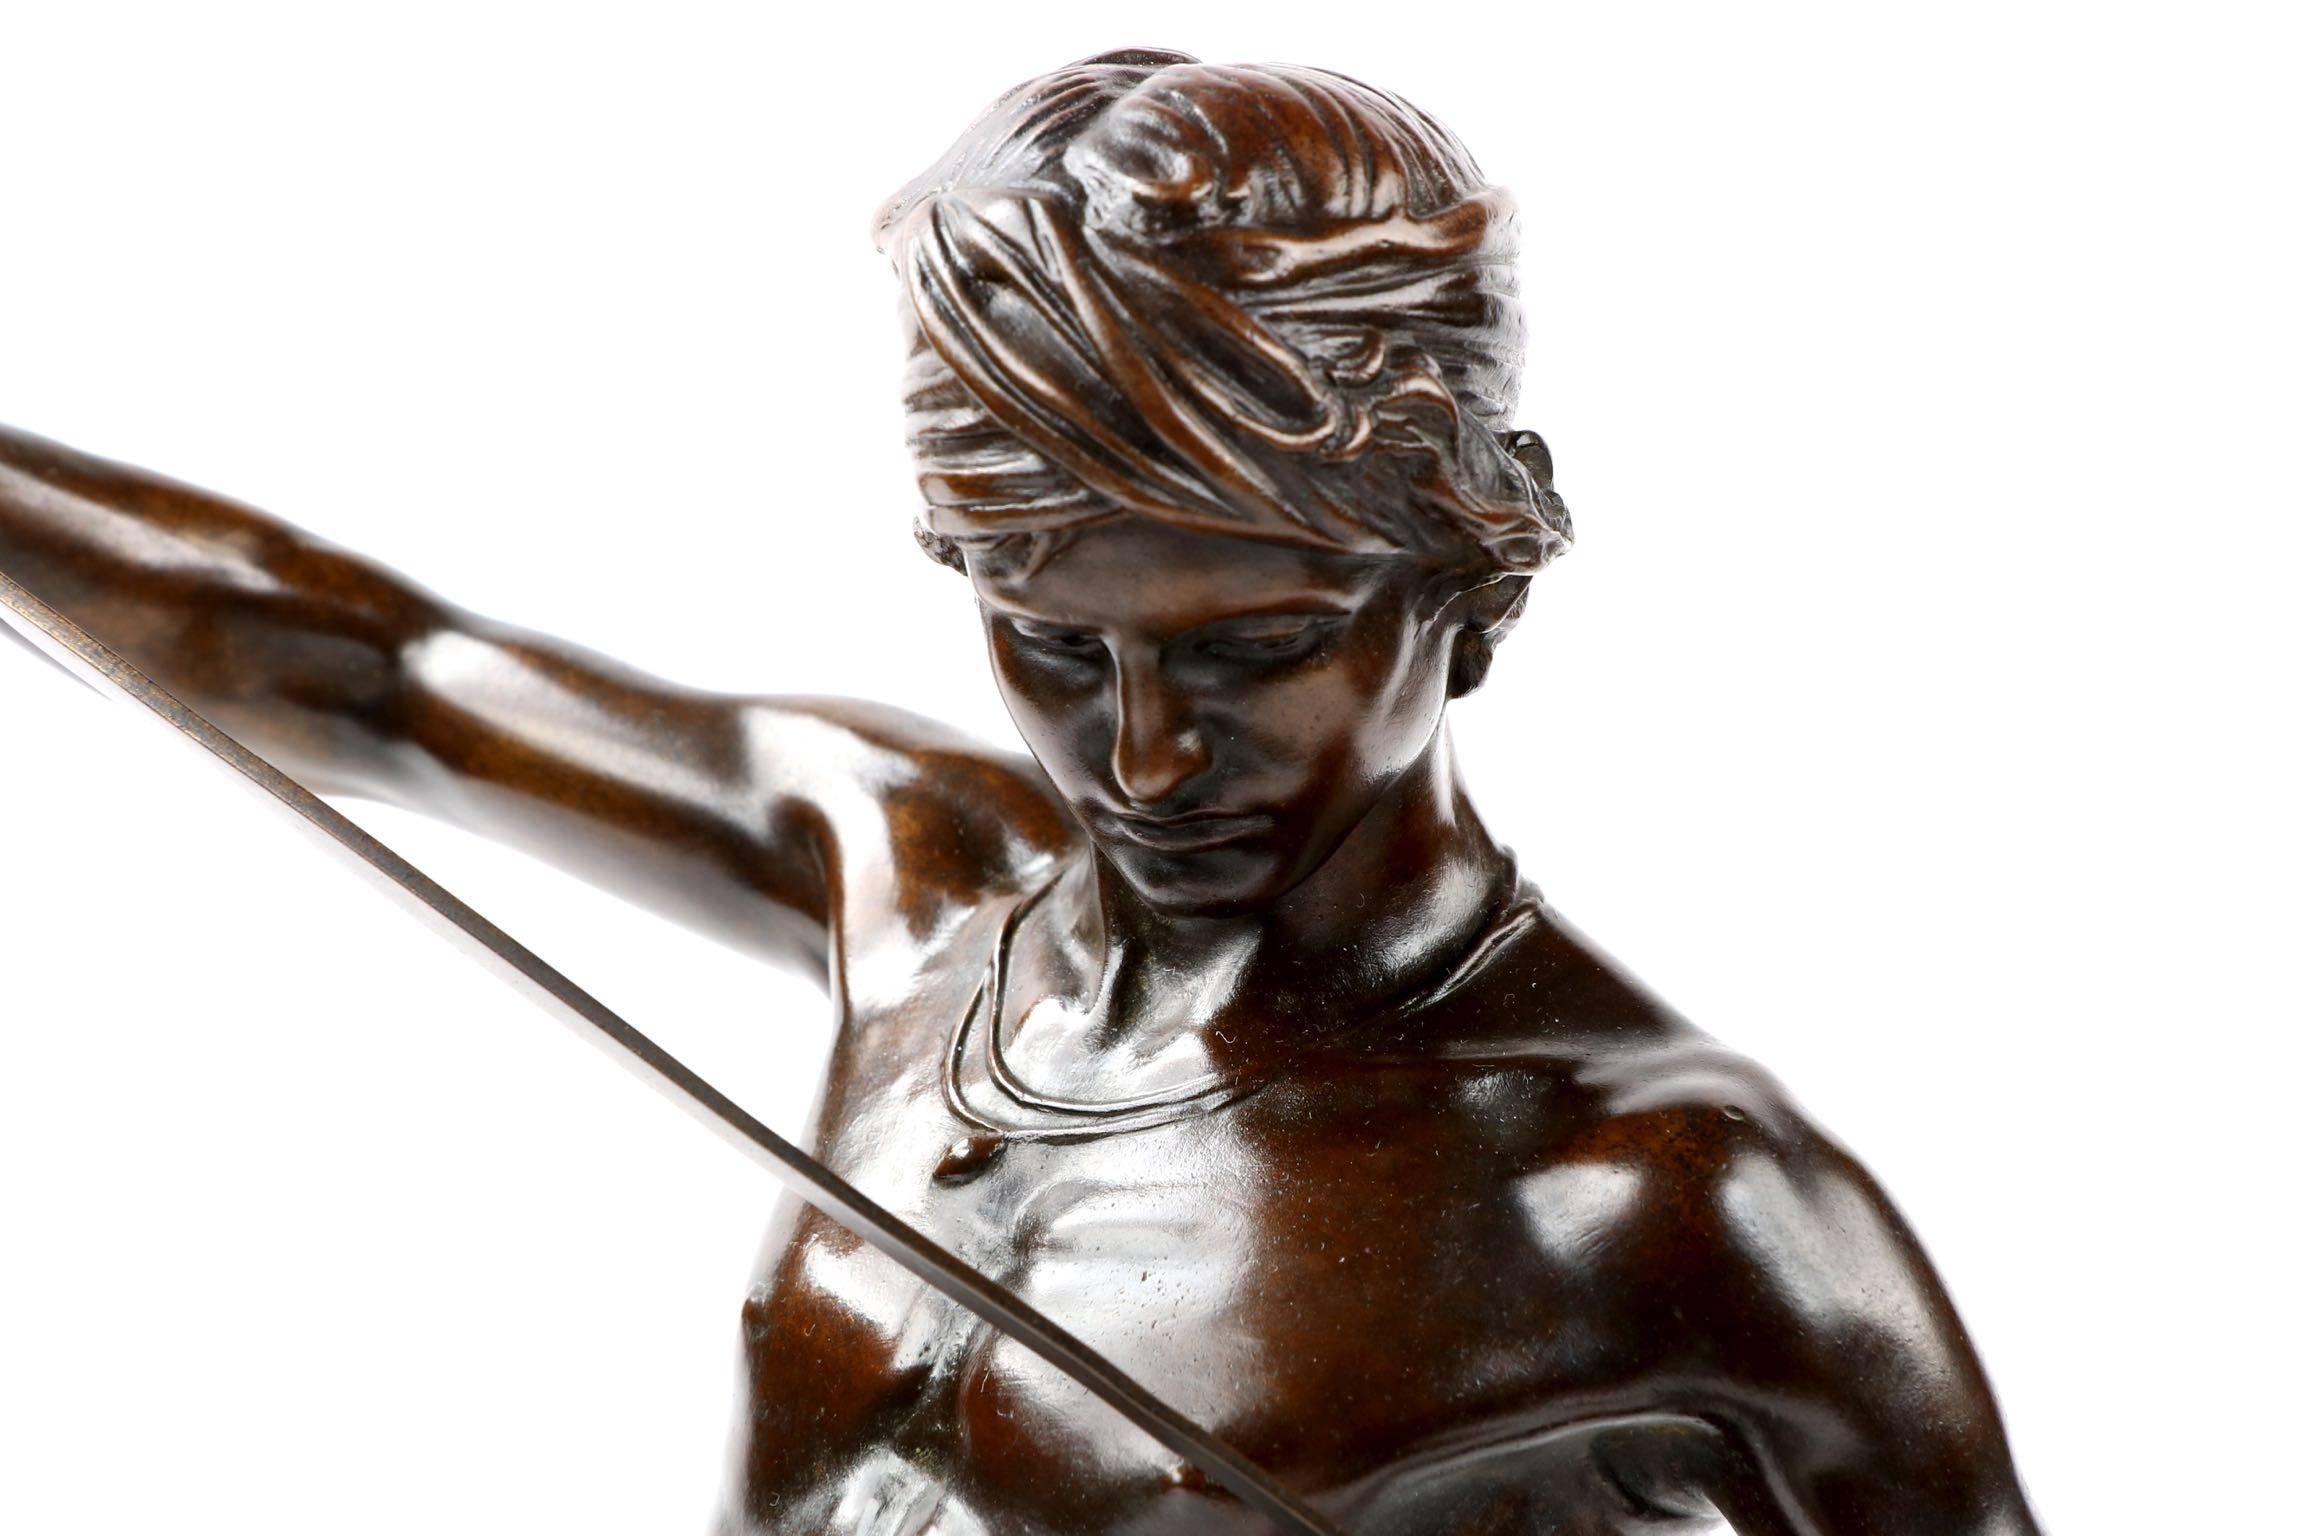 Patinated Antonin Mercie French Bronze Sculpture of David Vainqueur, Barbedienne